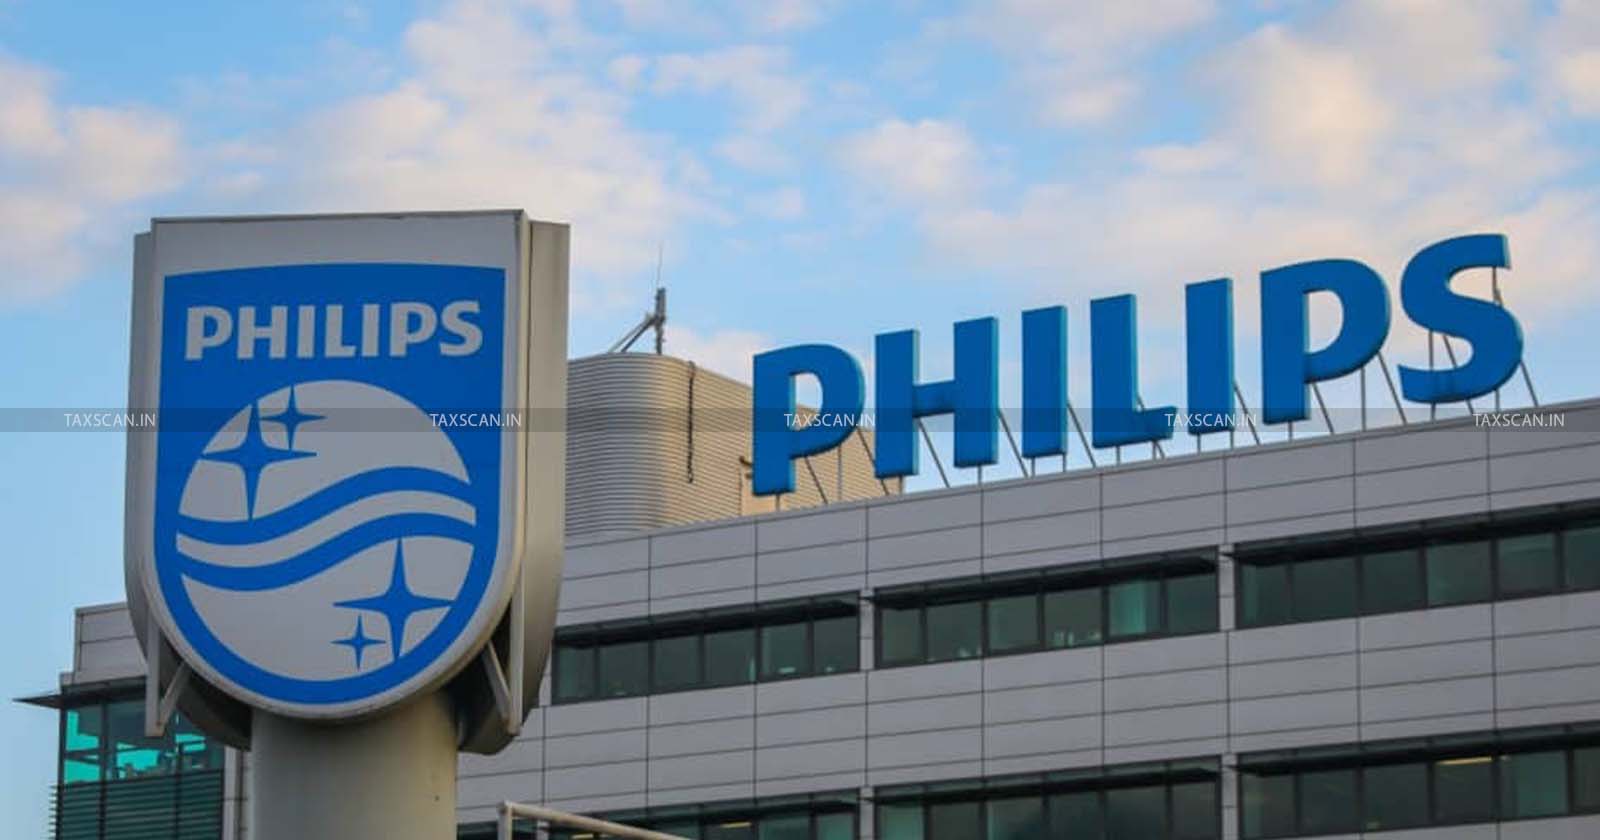 MBA Vacancy in Philips - CA Vacancy in Philips - Vacancy in Philips - MBA Hiring in Philips - CA Hiring in Philips - taxscan